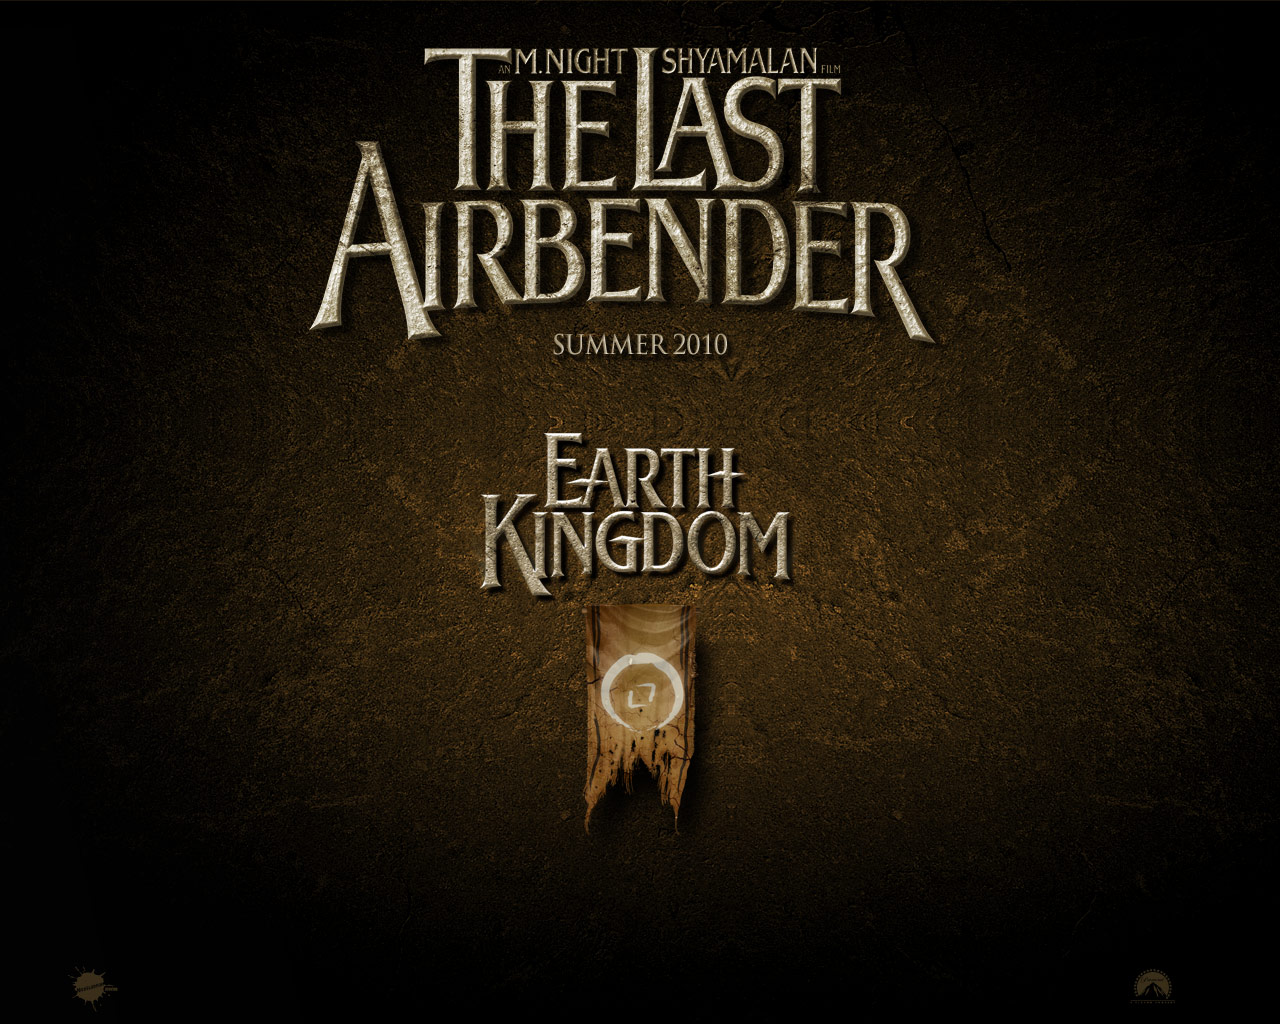 The Last Airbender 2 Movie Release Date 2012